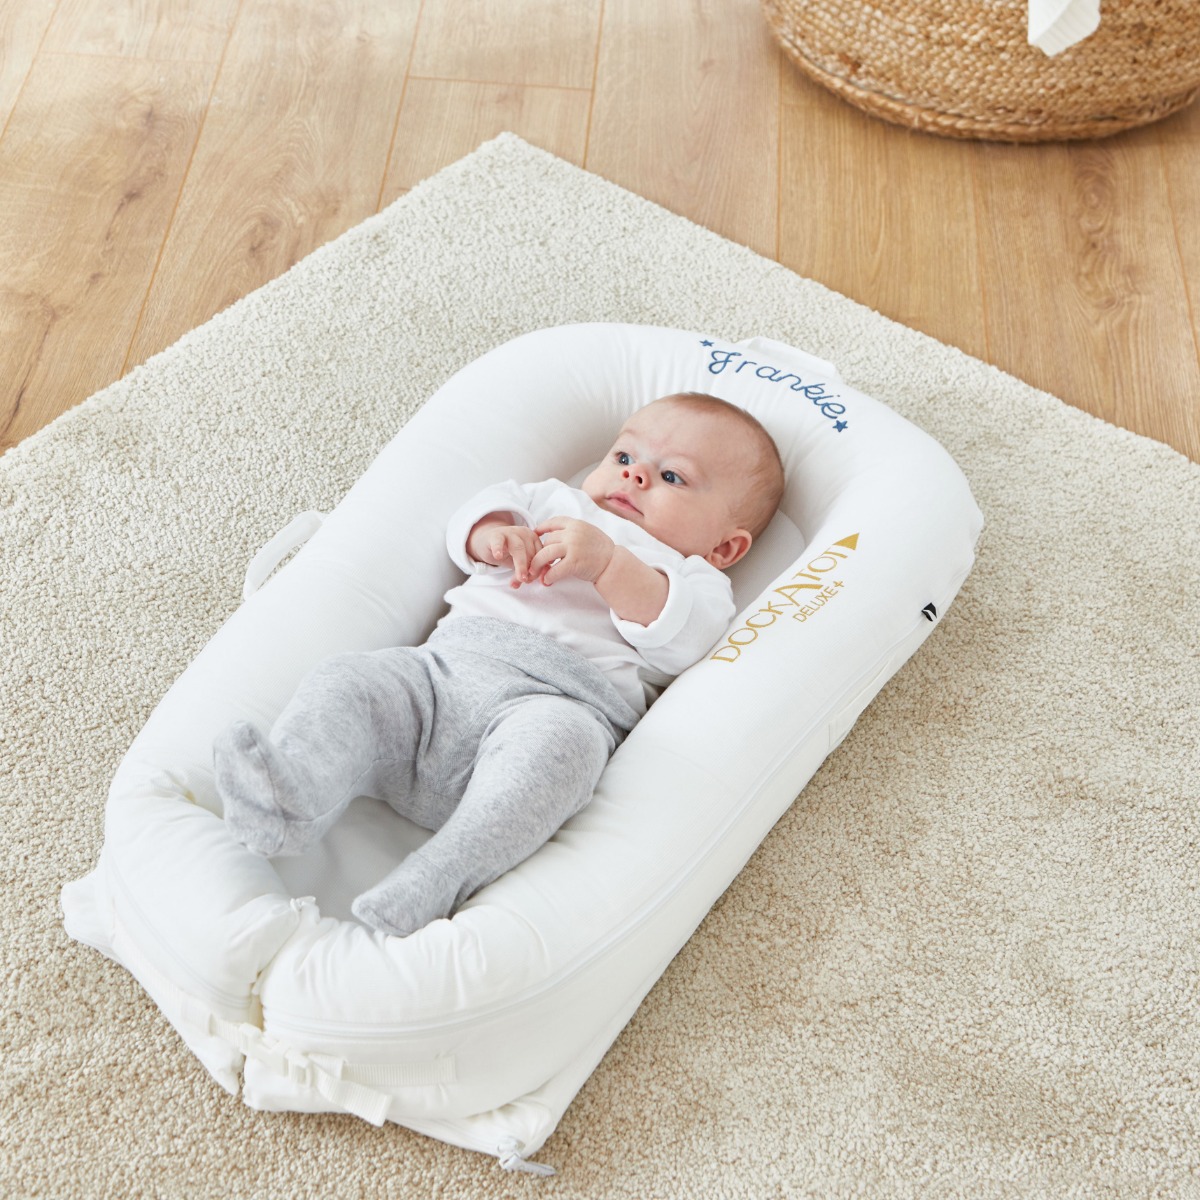 Personalised White Star Design DockATot Baby Bed